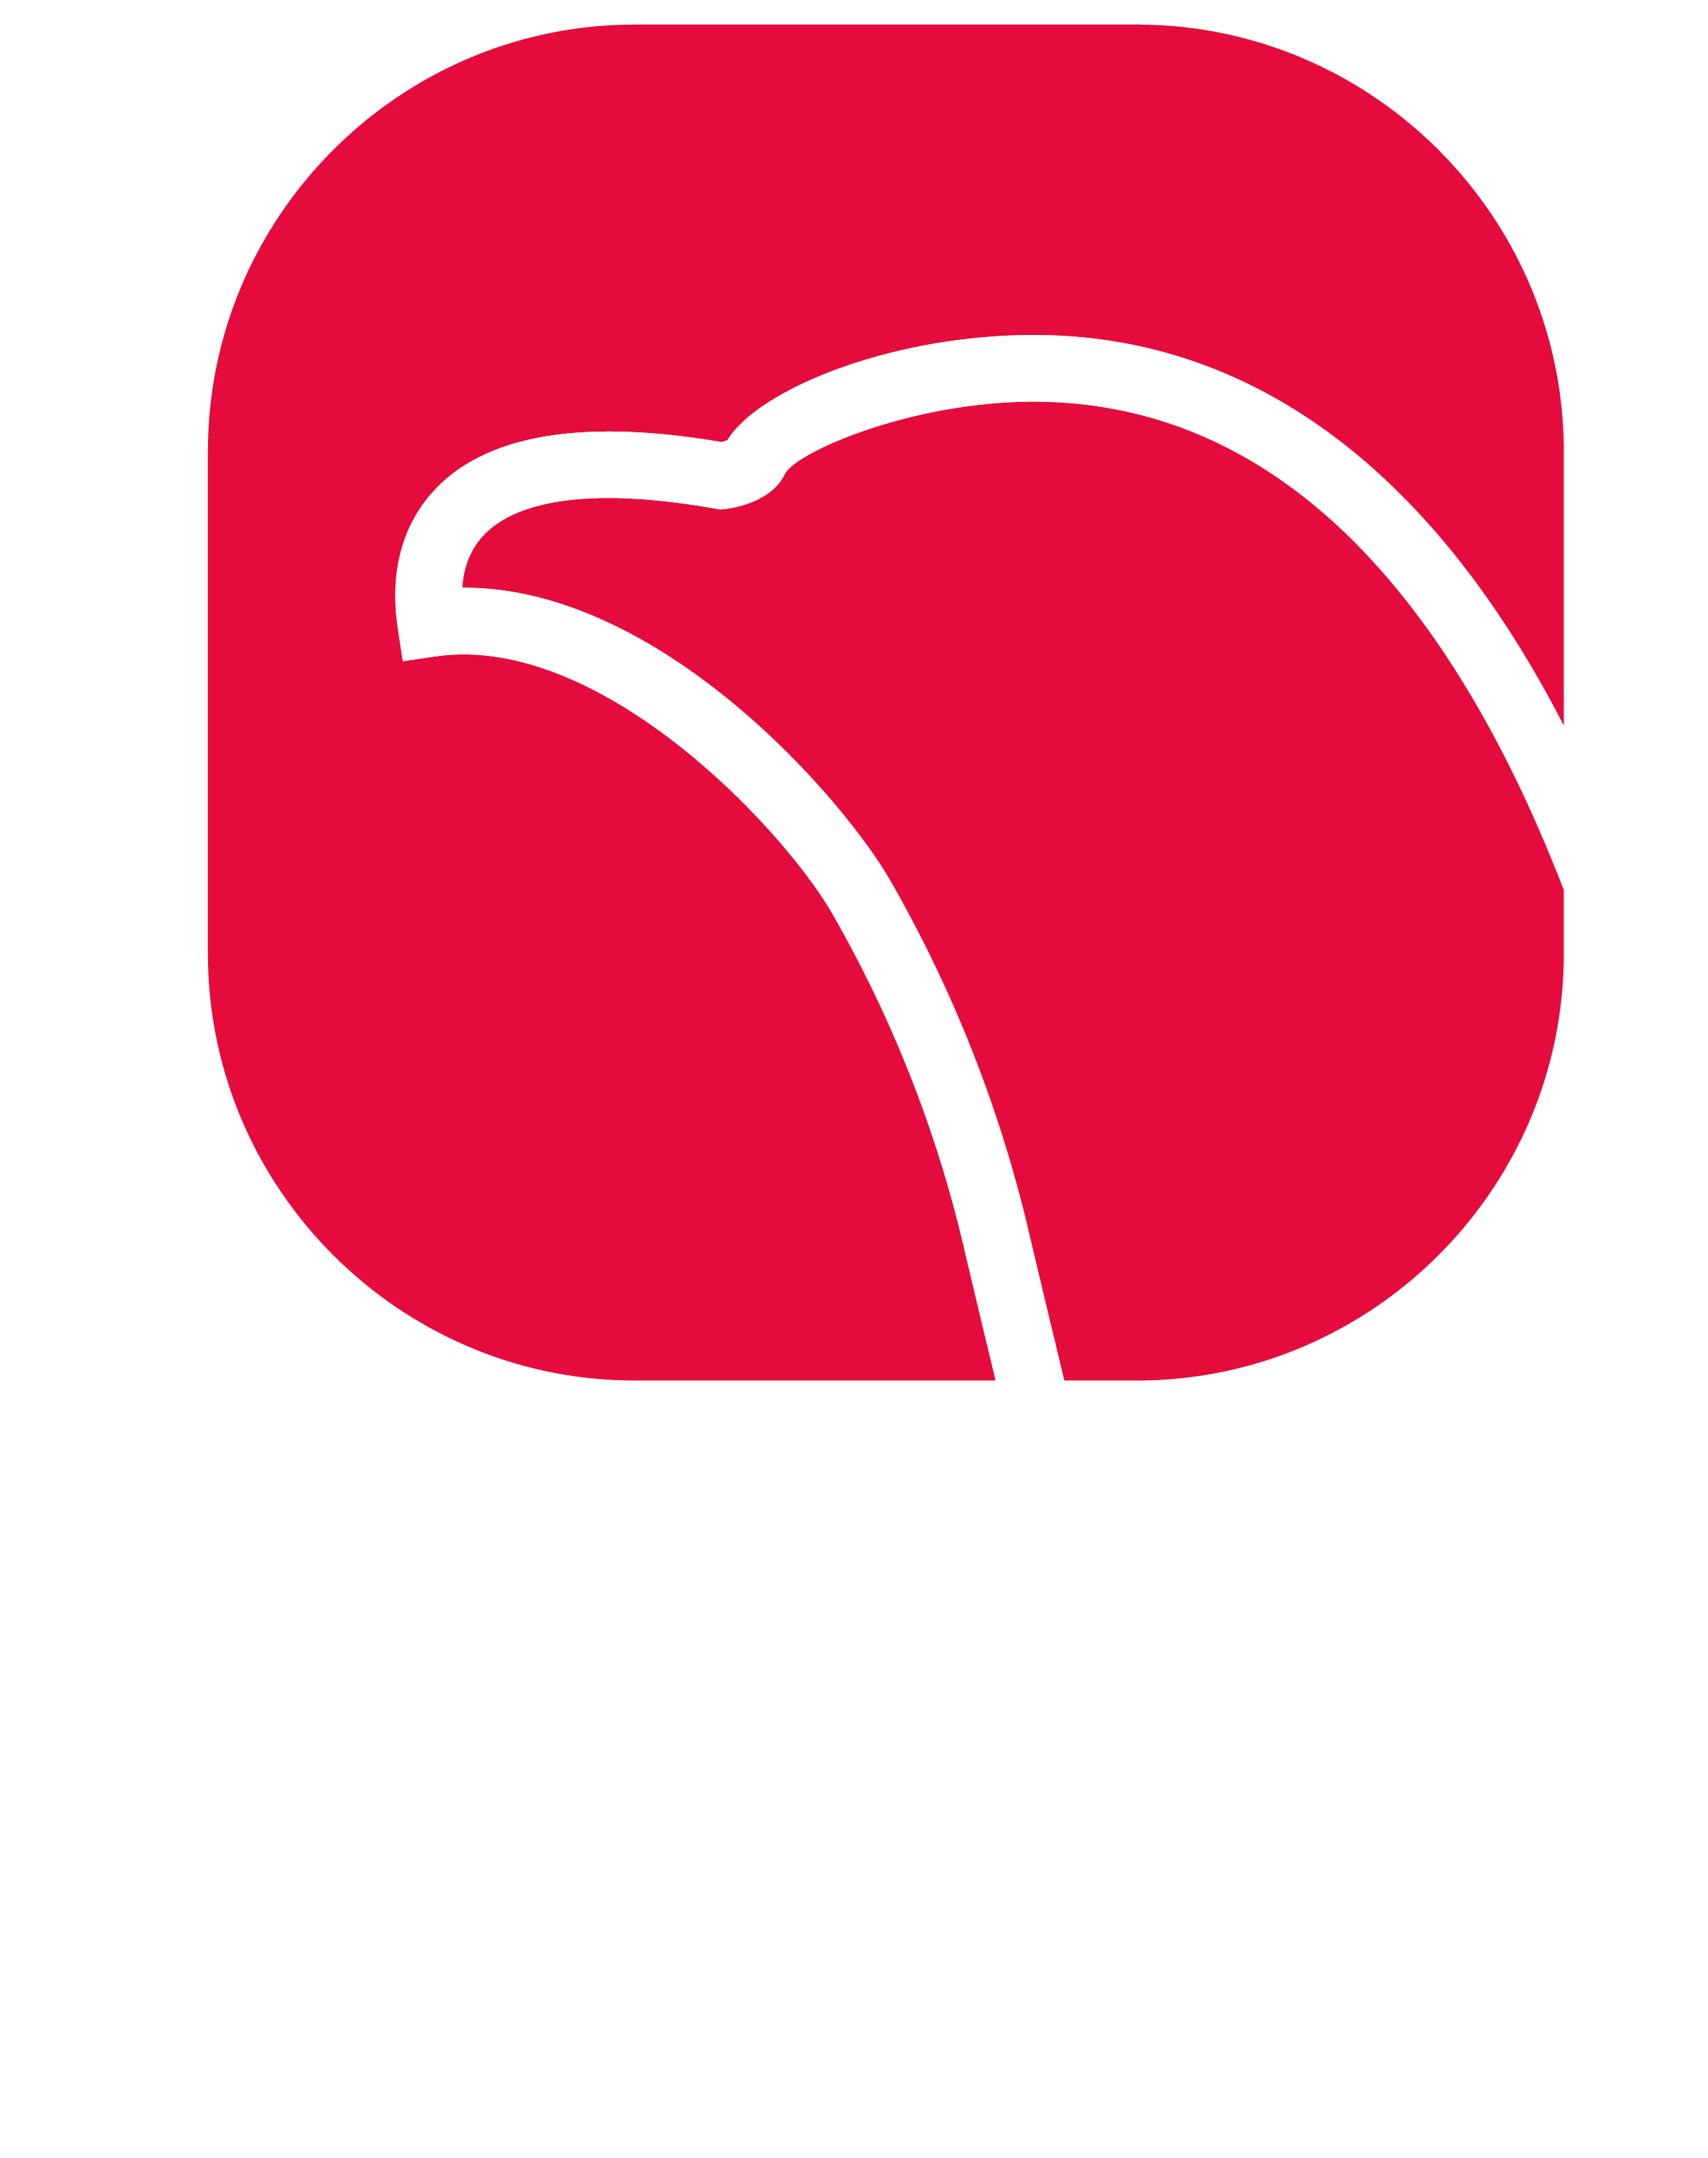 Logo Sistemas Águila